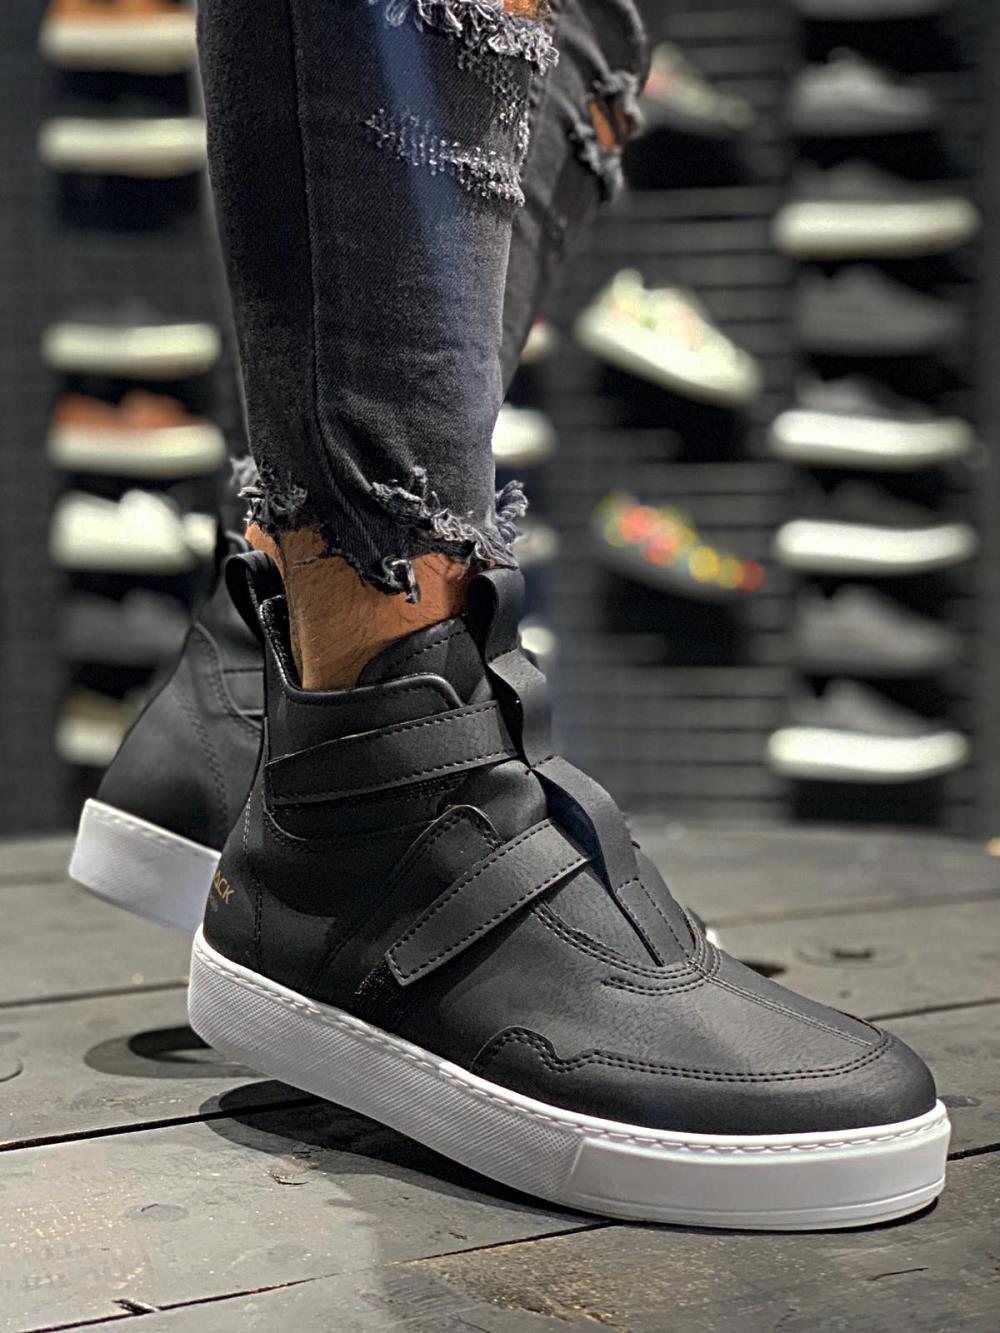 Men's Casual Sneaker Sport Boots 033 Black White - STREET MODE ™